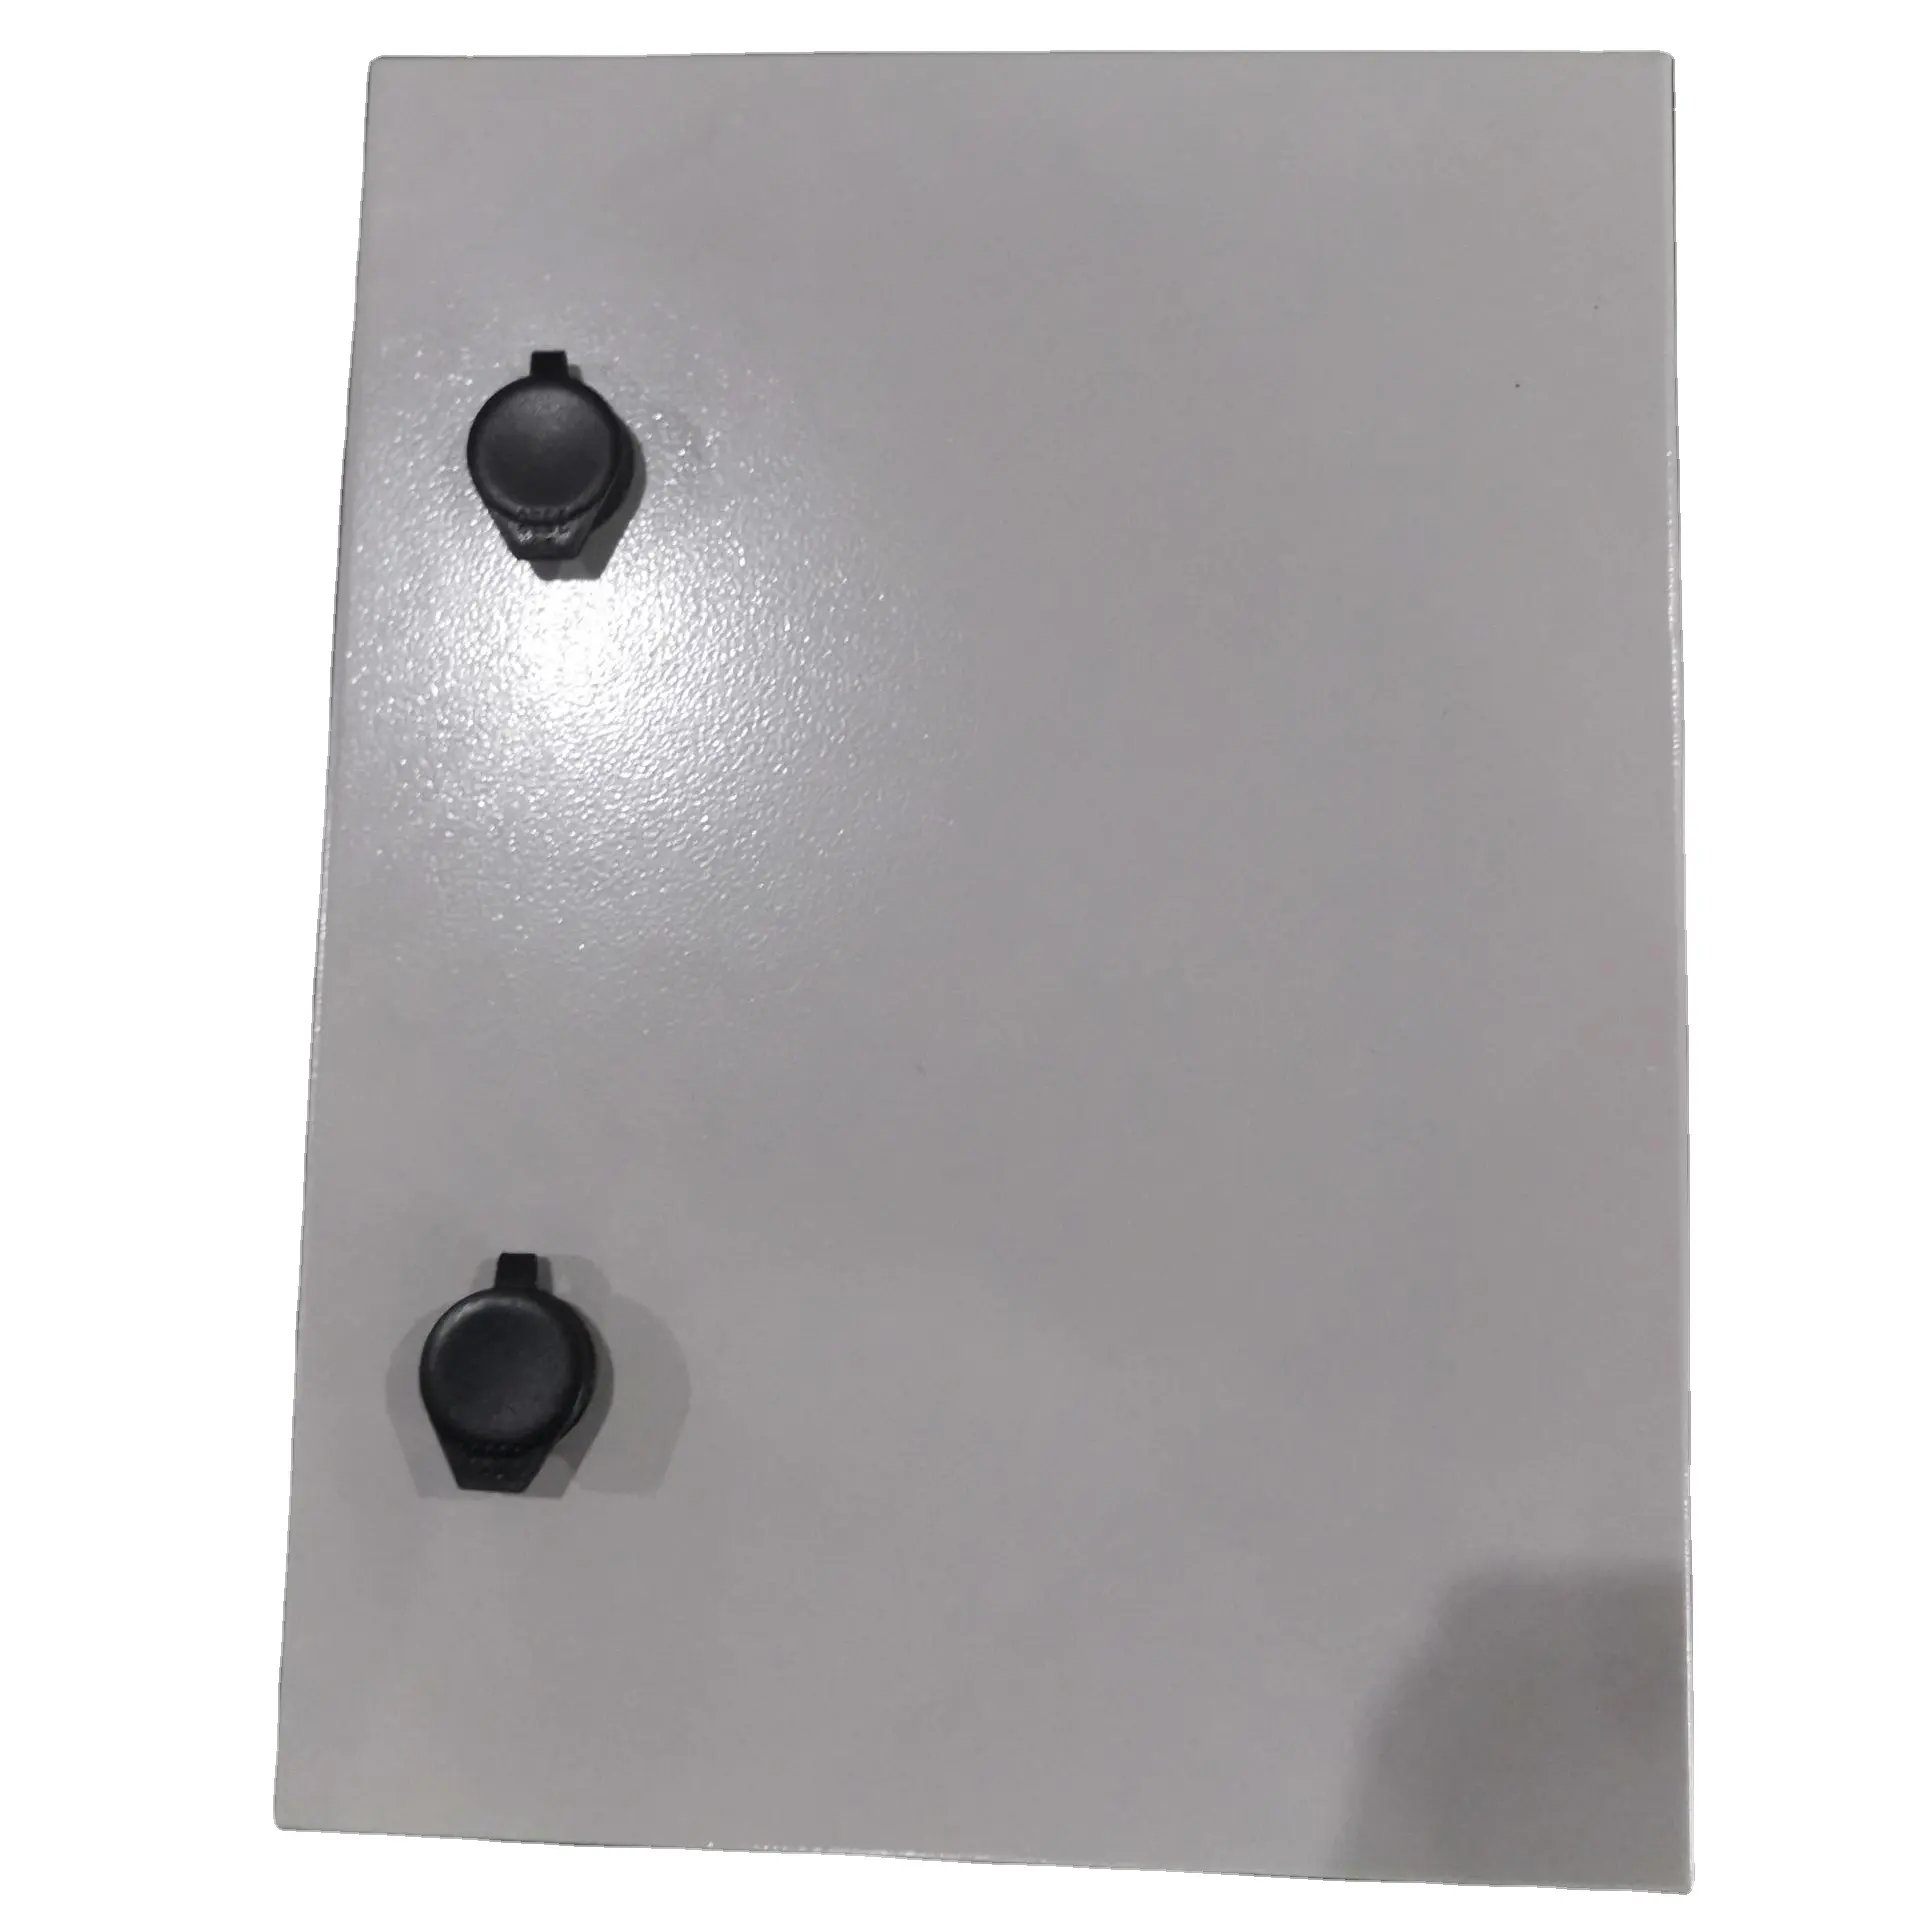 Caja de empalme de control eléctrico, carcasa de acero inoxidable 316 a prueba de agua IP65 personalizada range